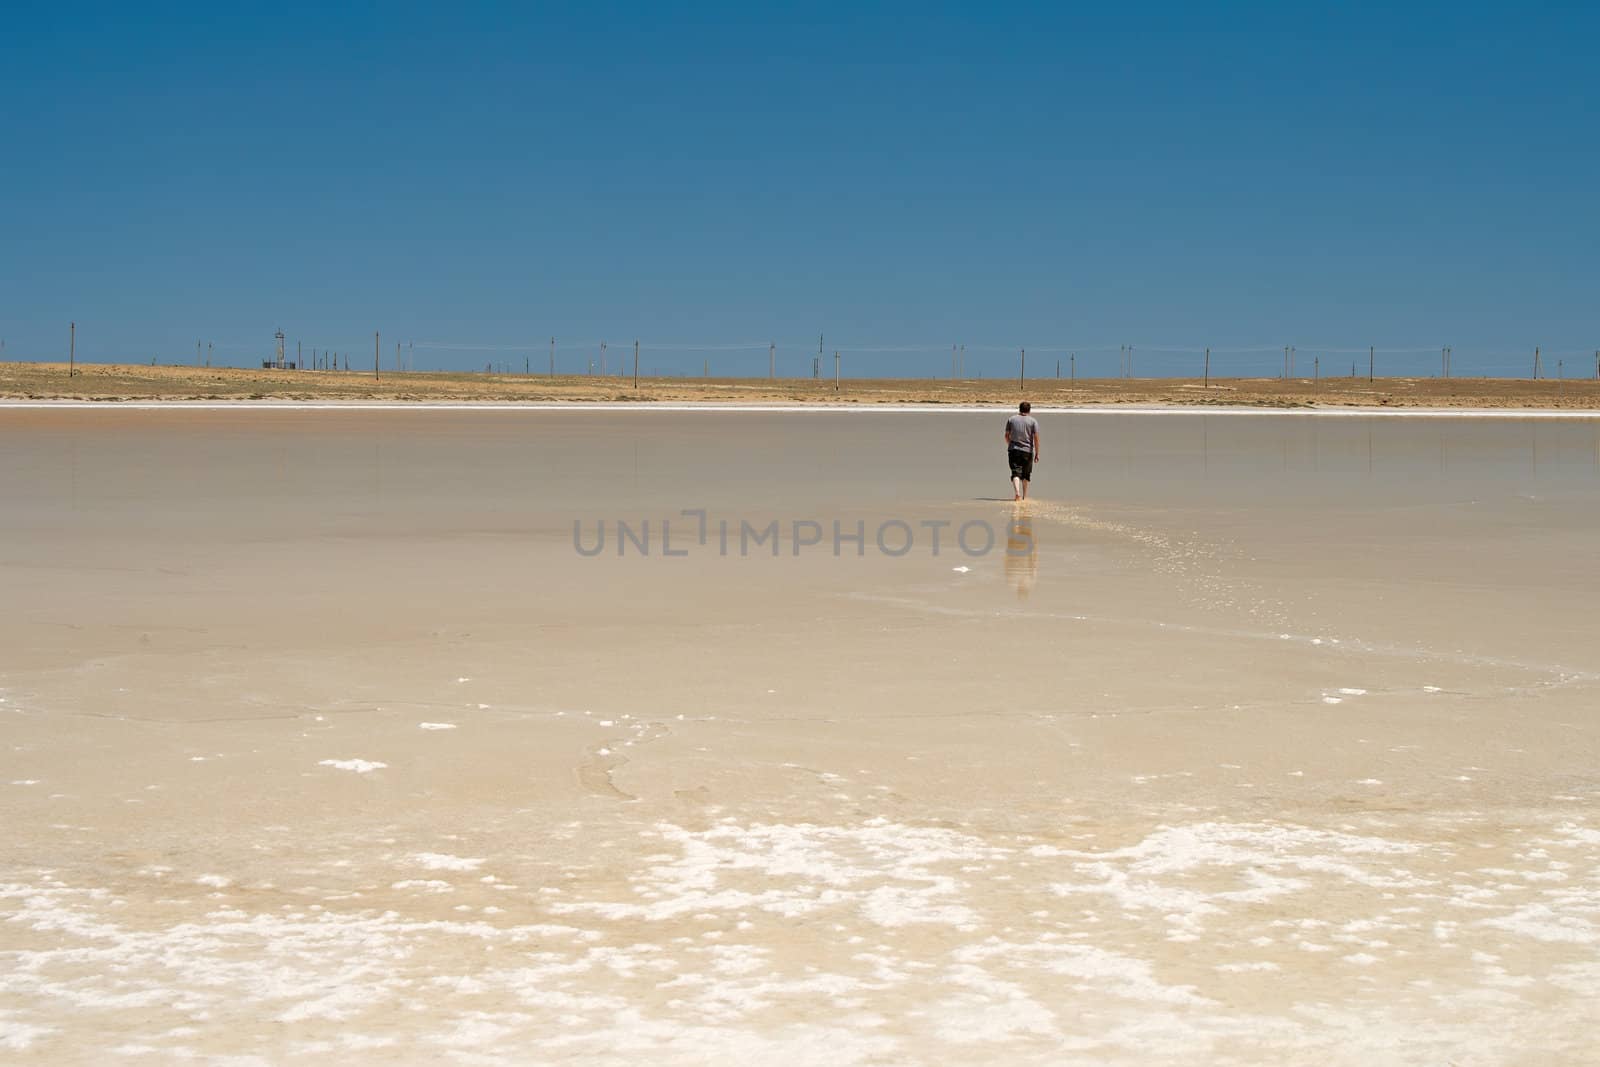 The guy walking barefoot on the salt lake.